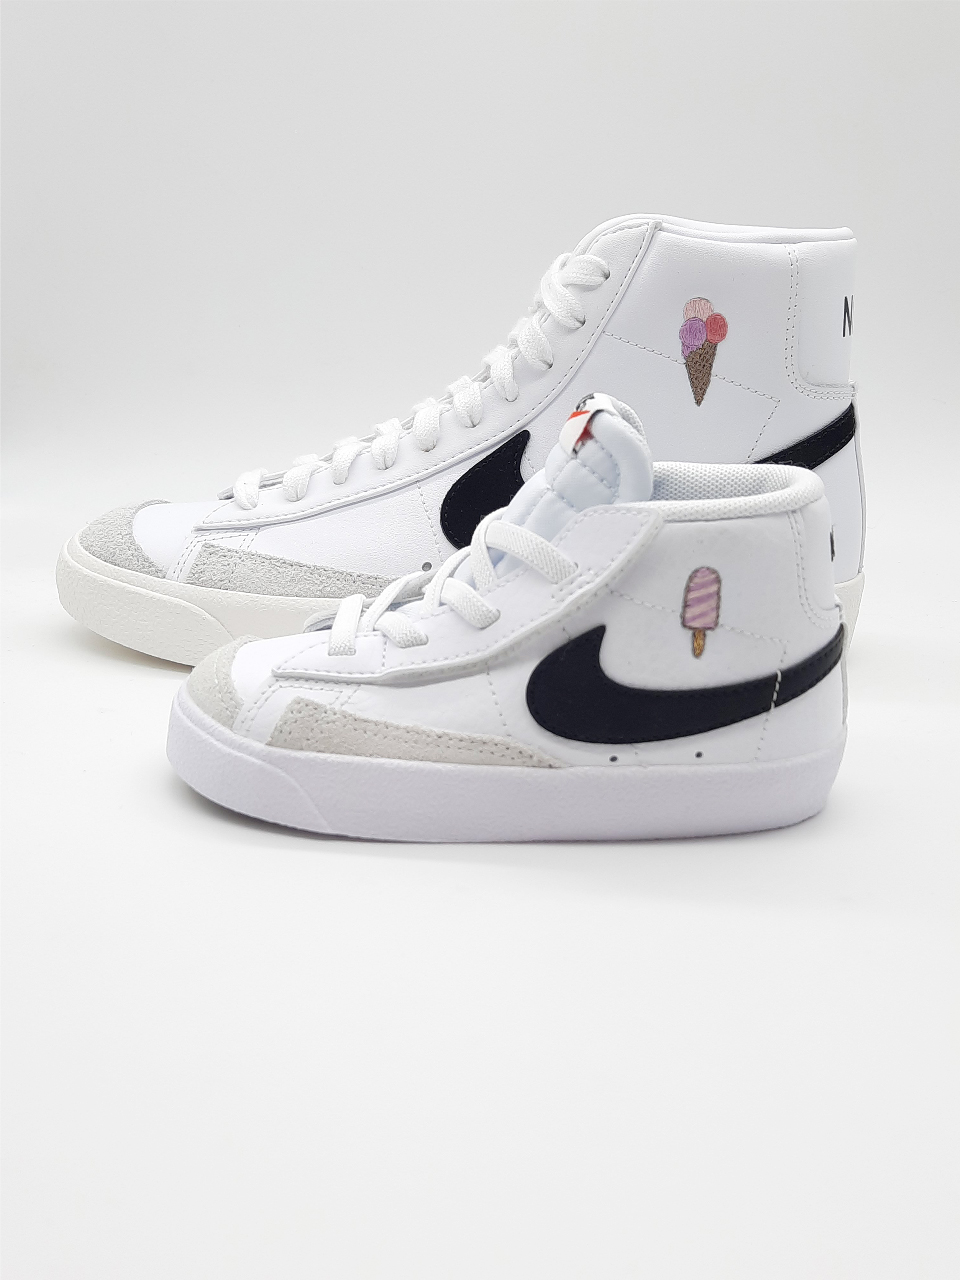 Broderies glaces sur sneakers Nike Blazer blanches et noires